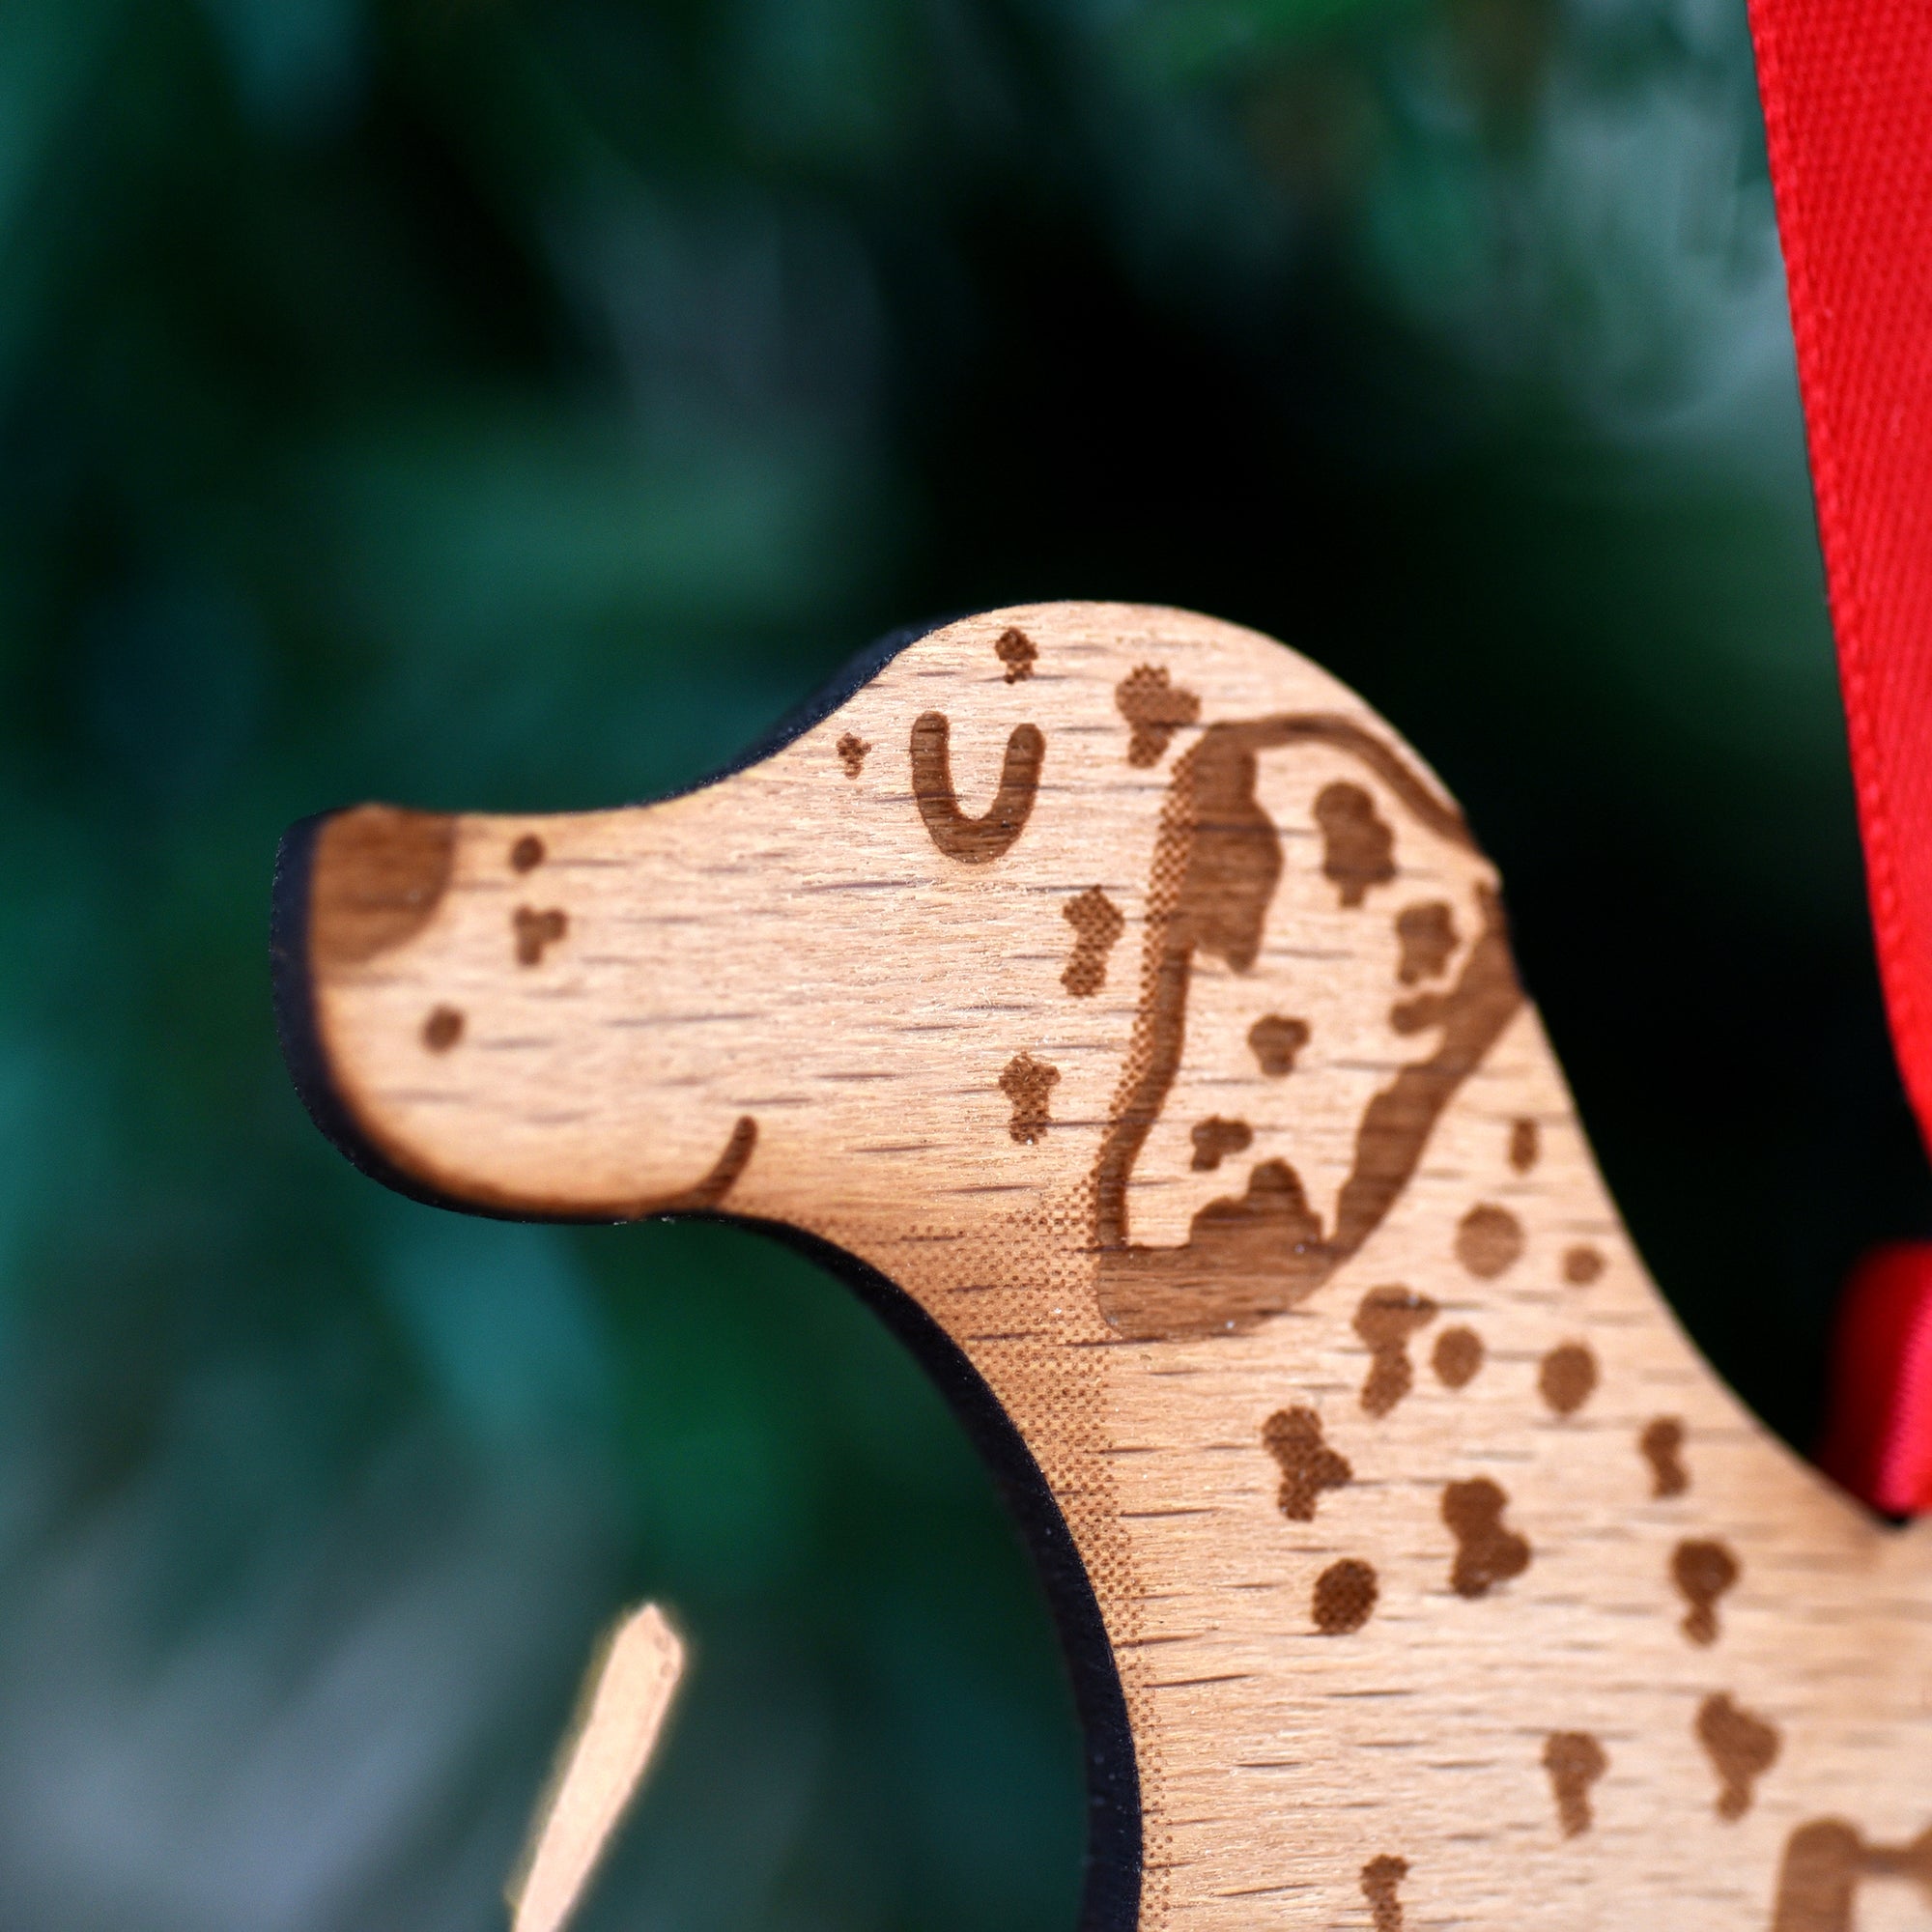 Dog Christmas Decoration - Dalmatian - Solid Wood